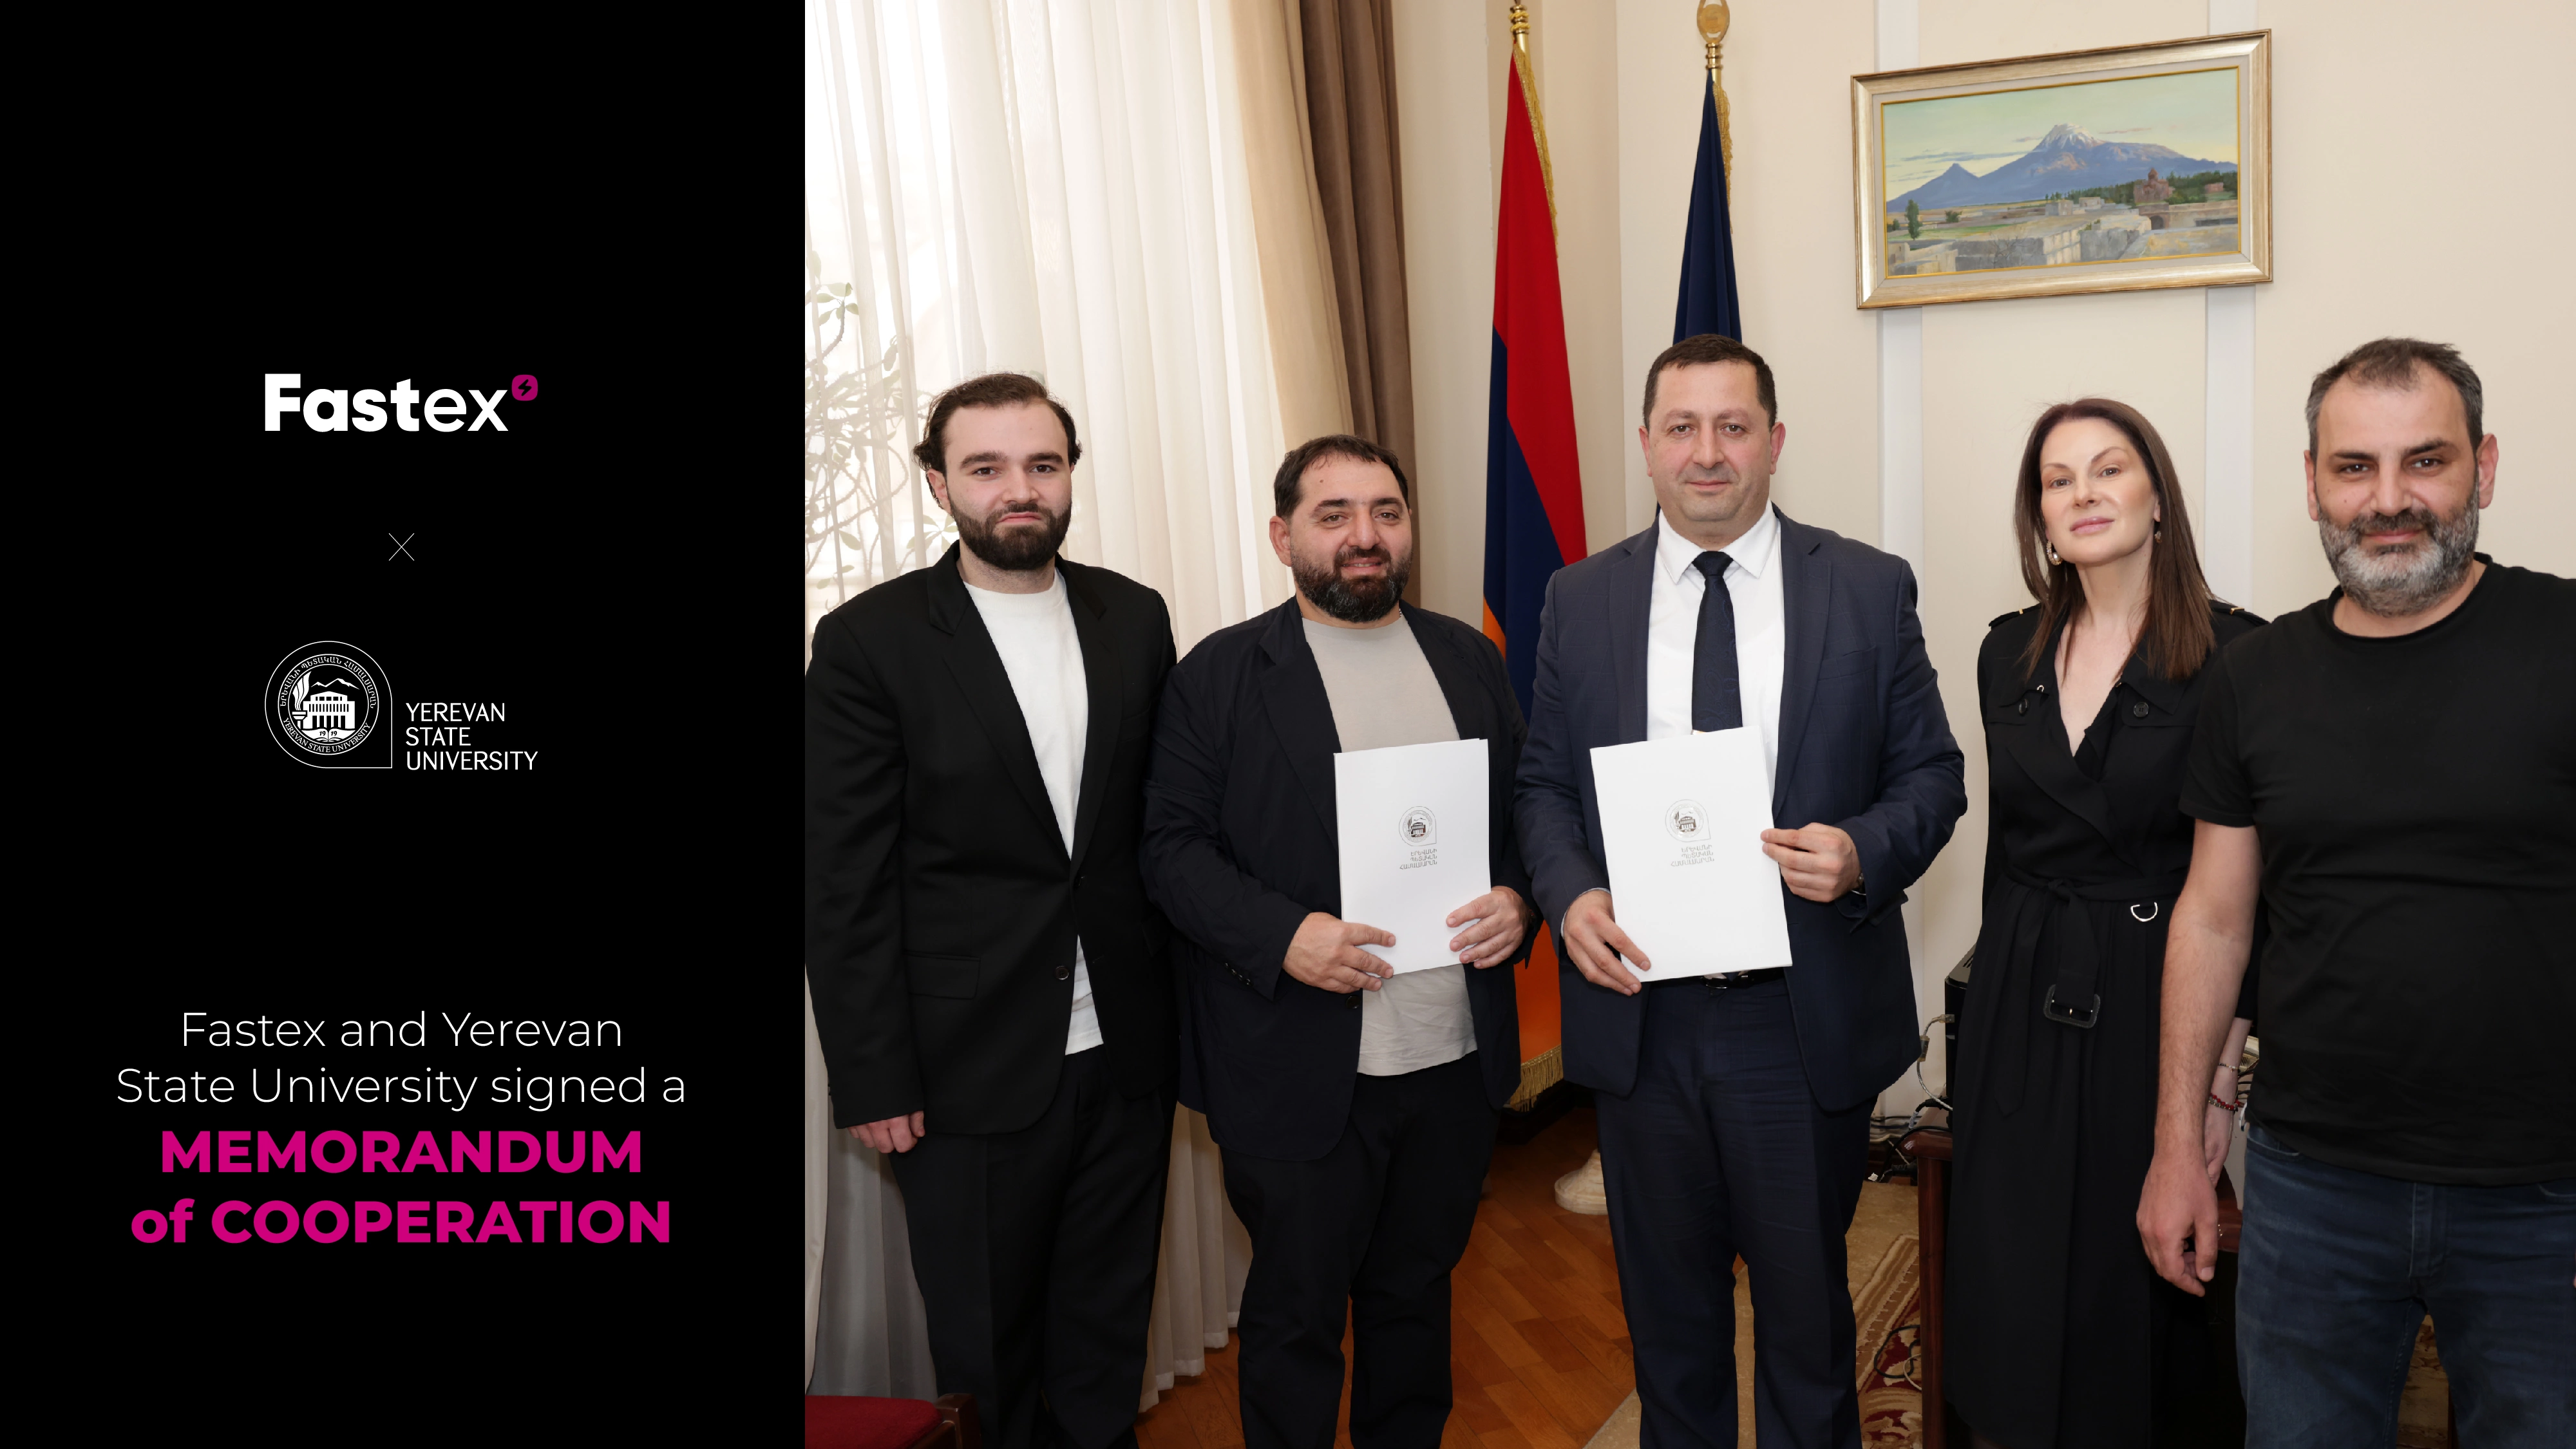 Fastex and Yerevan State University Signed a Memorandum of Cooperation 